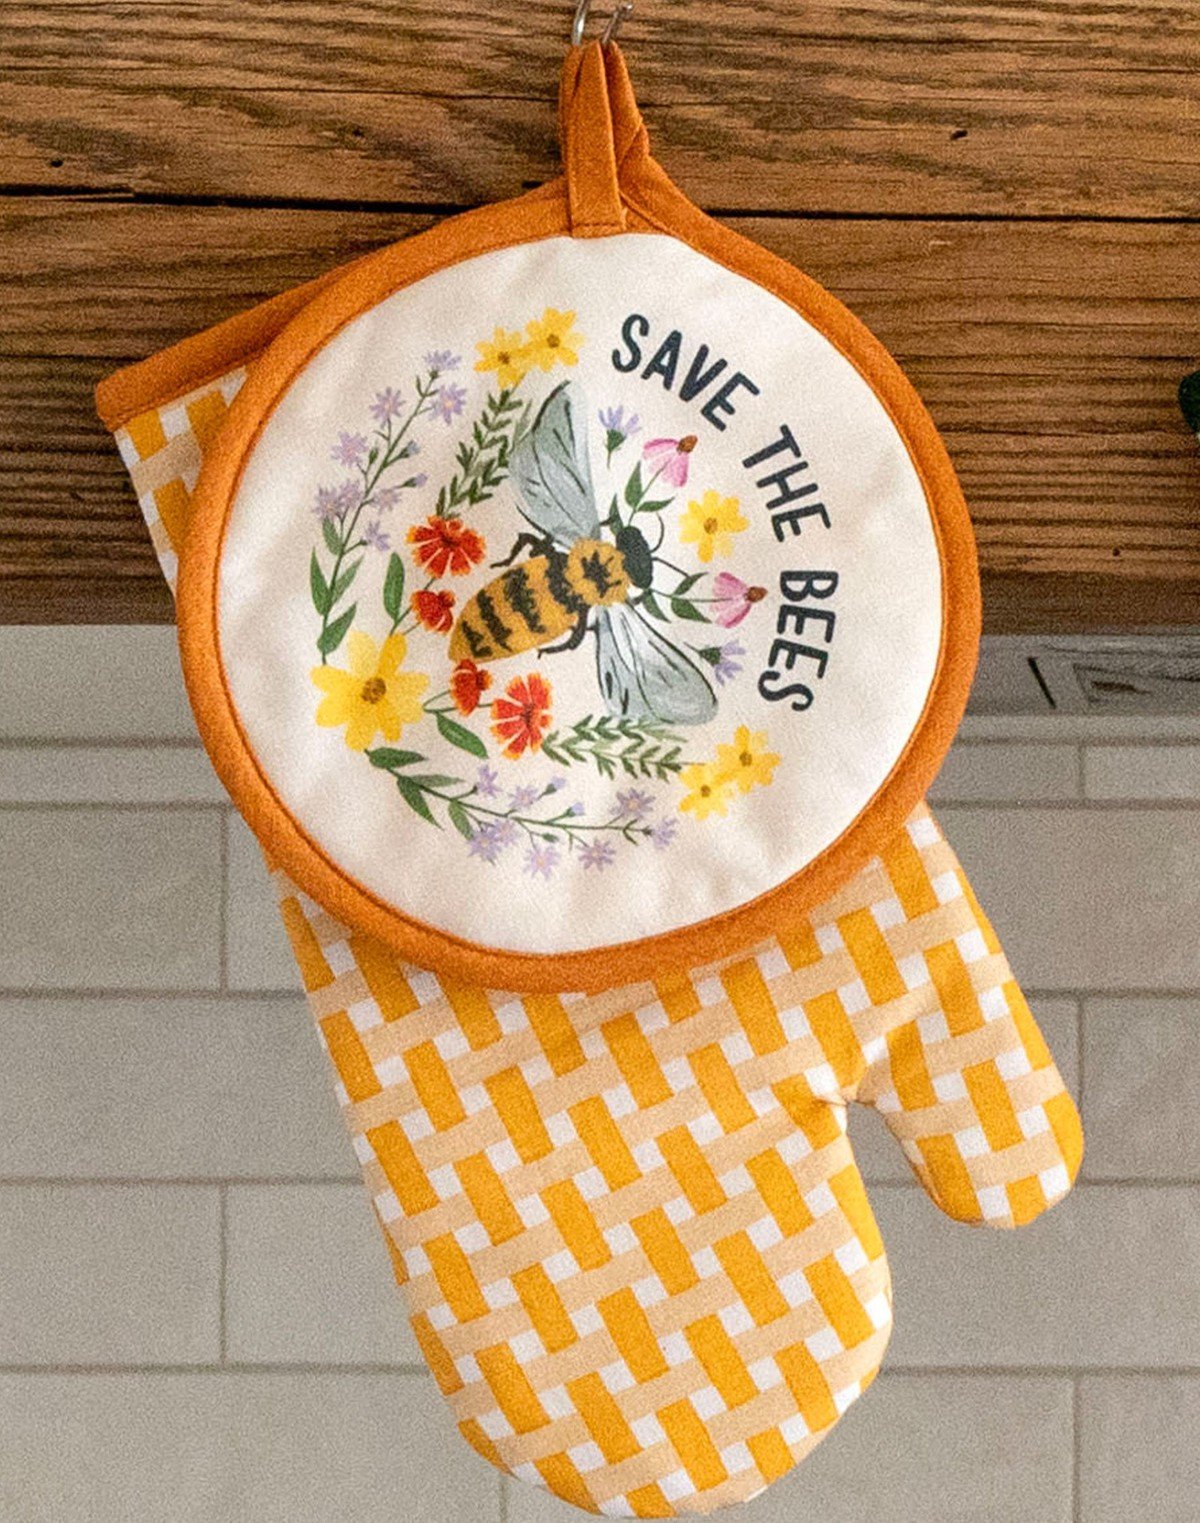 Save The Bees Pot Holder Set item